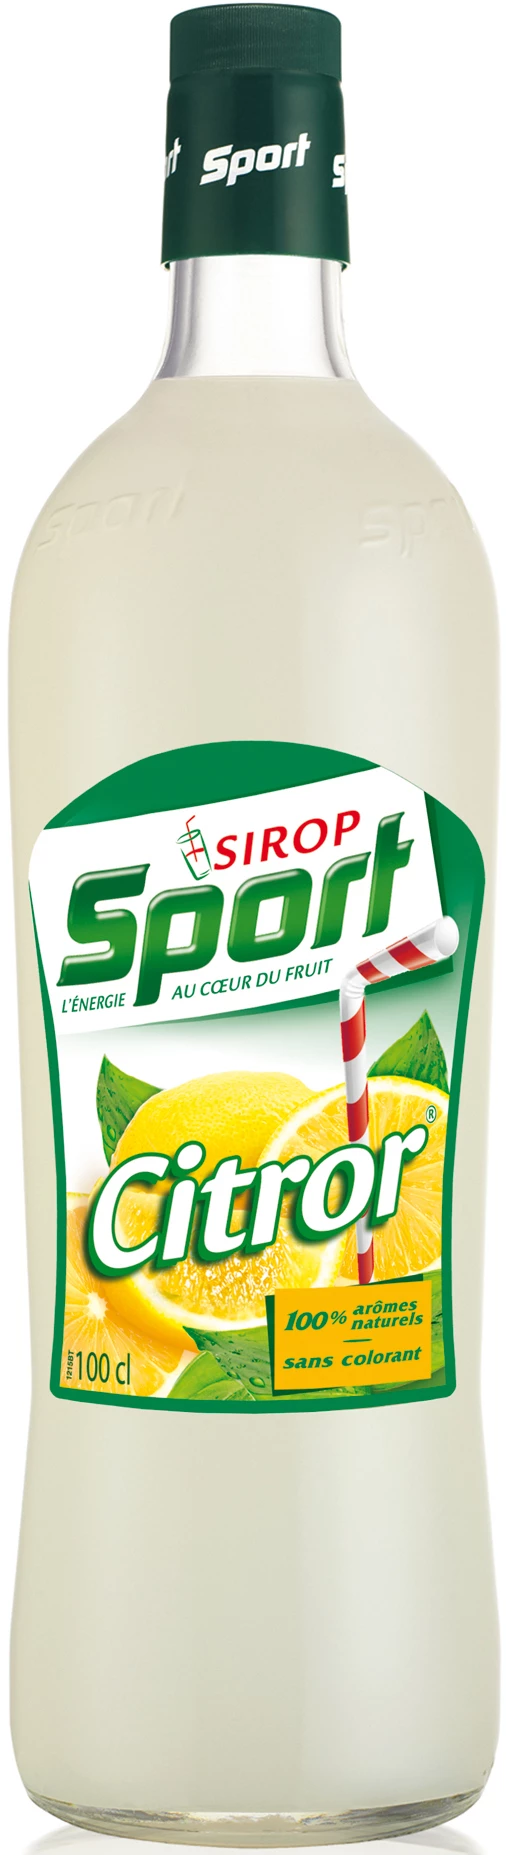 Sirop Sport Citror 1l